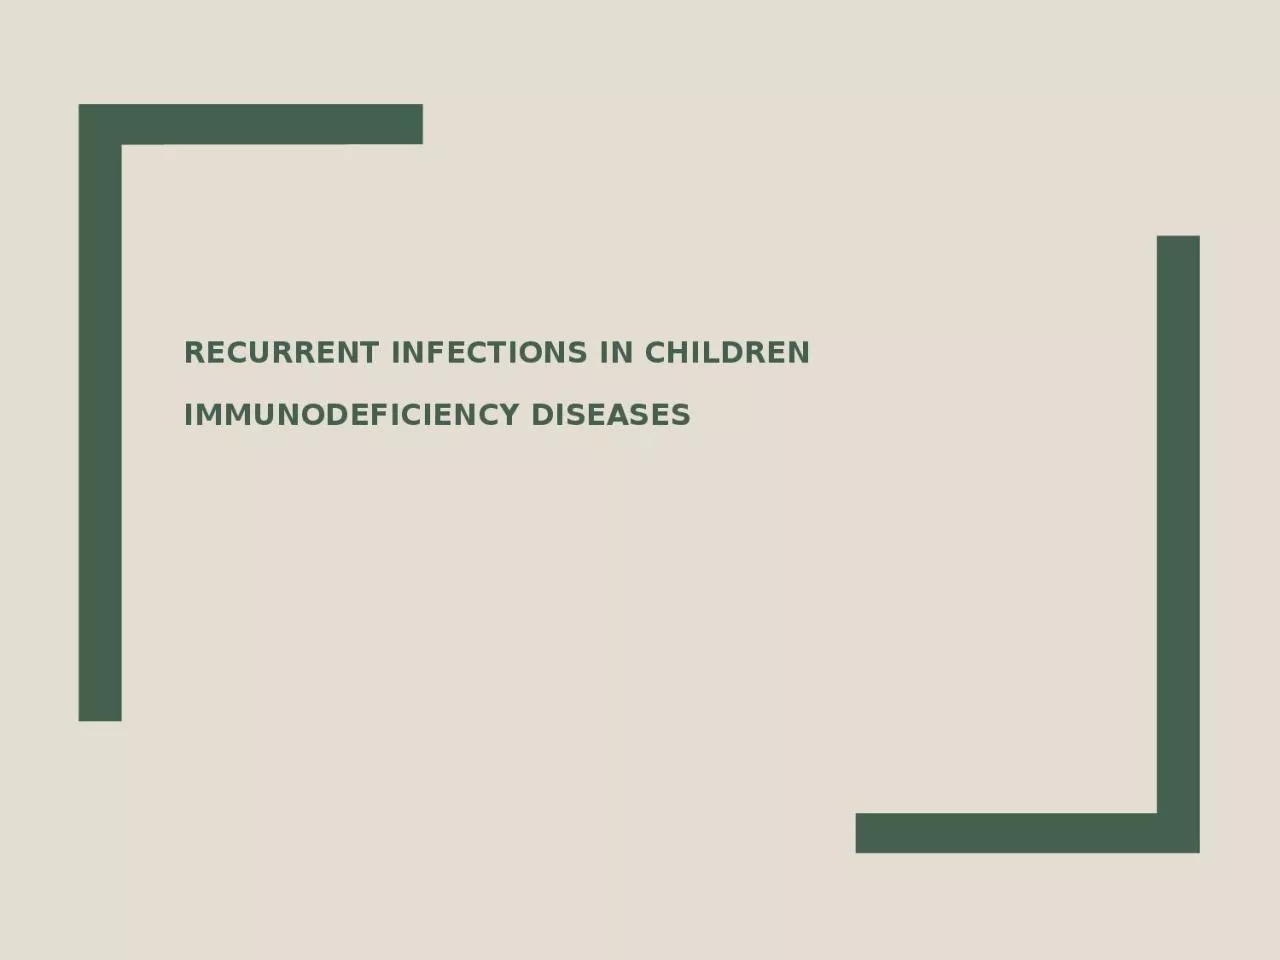 Recurrent infections in children